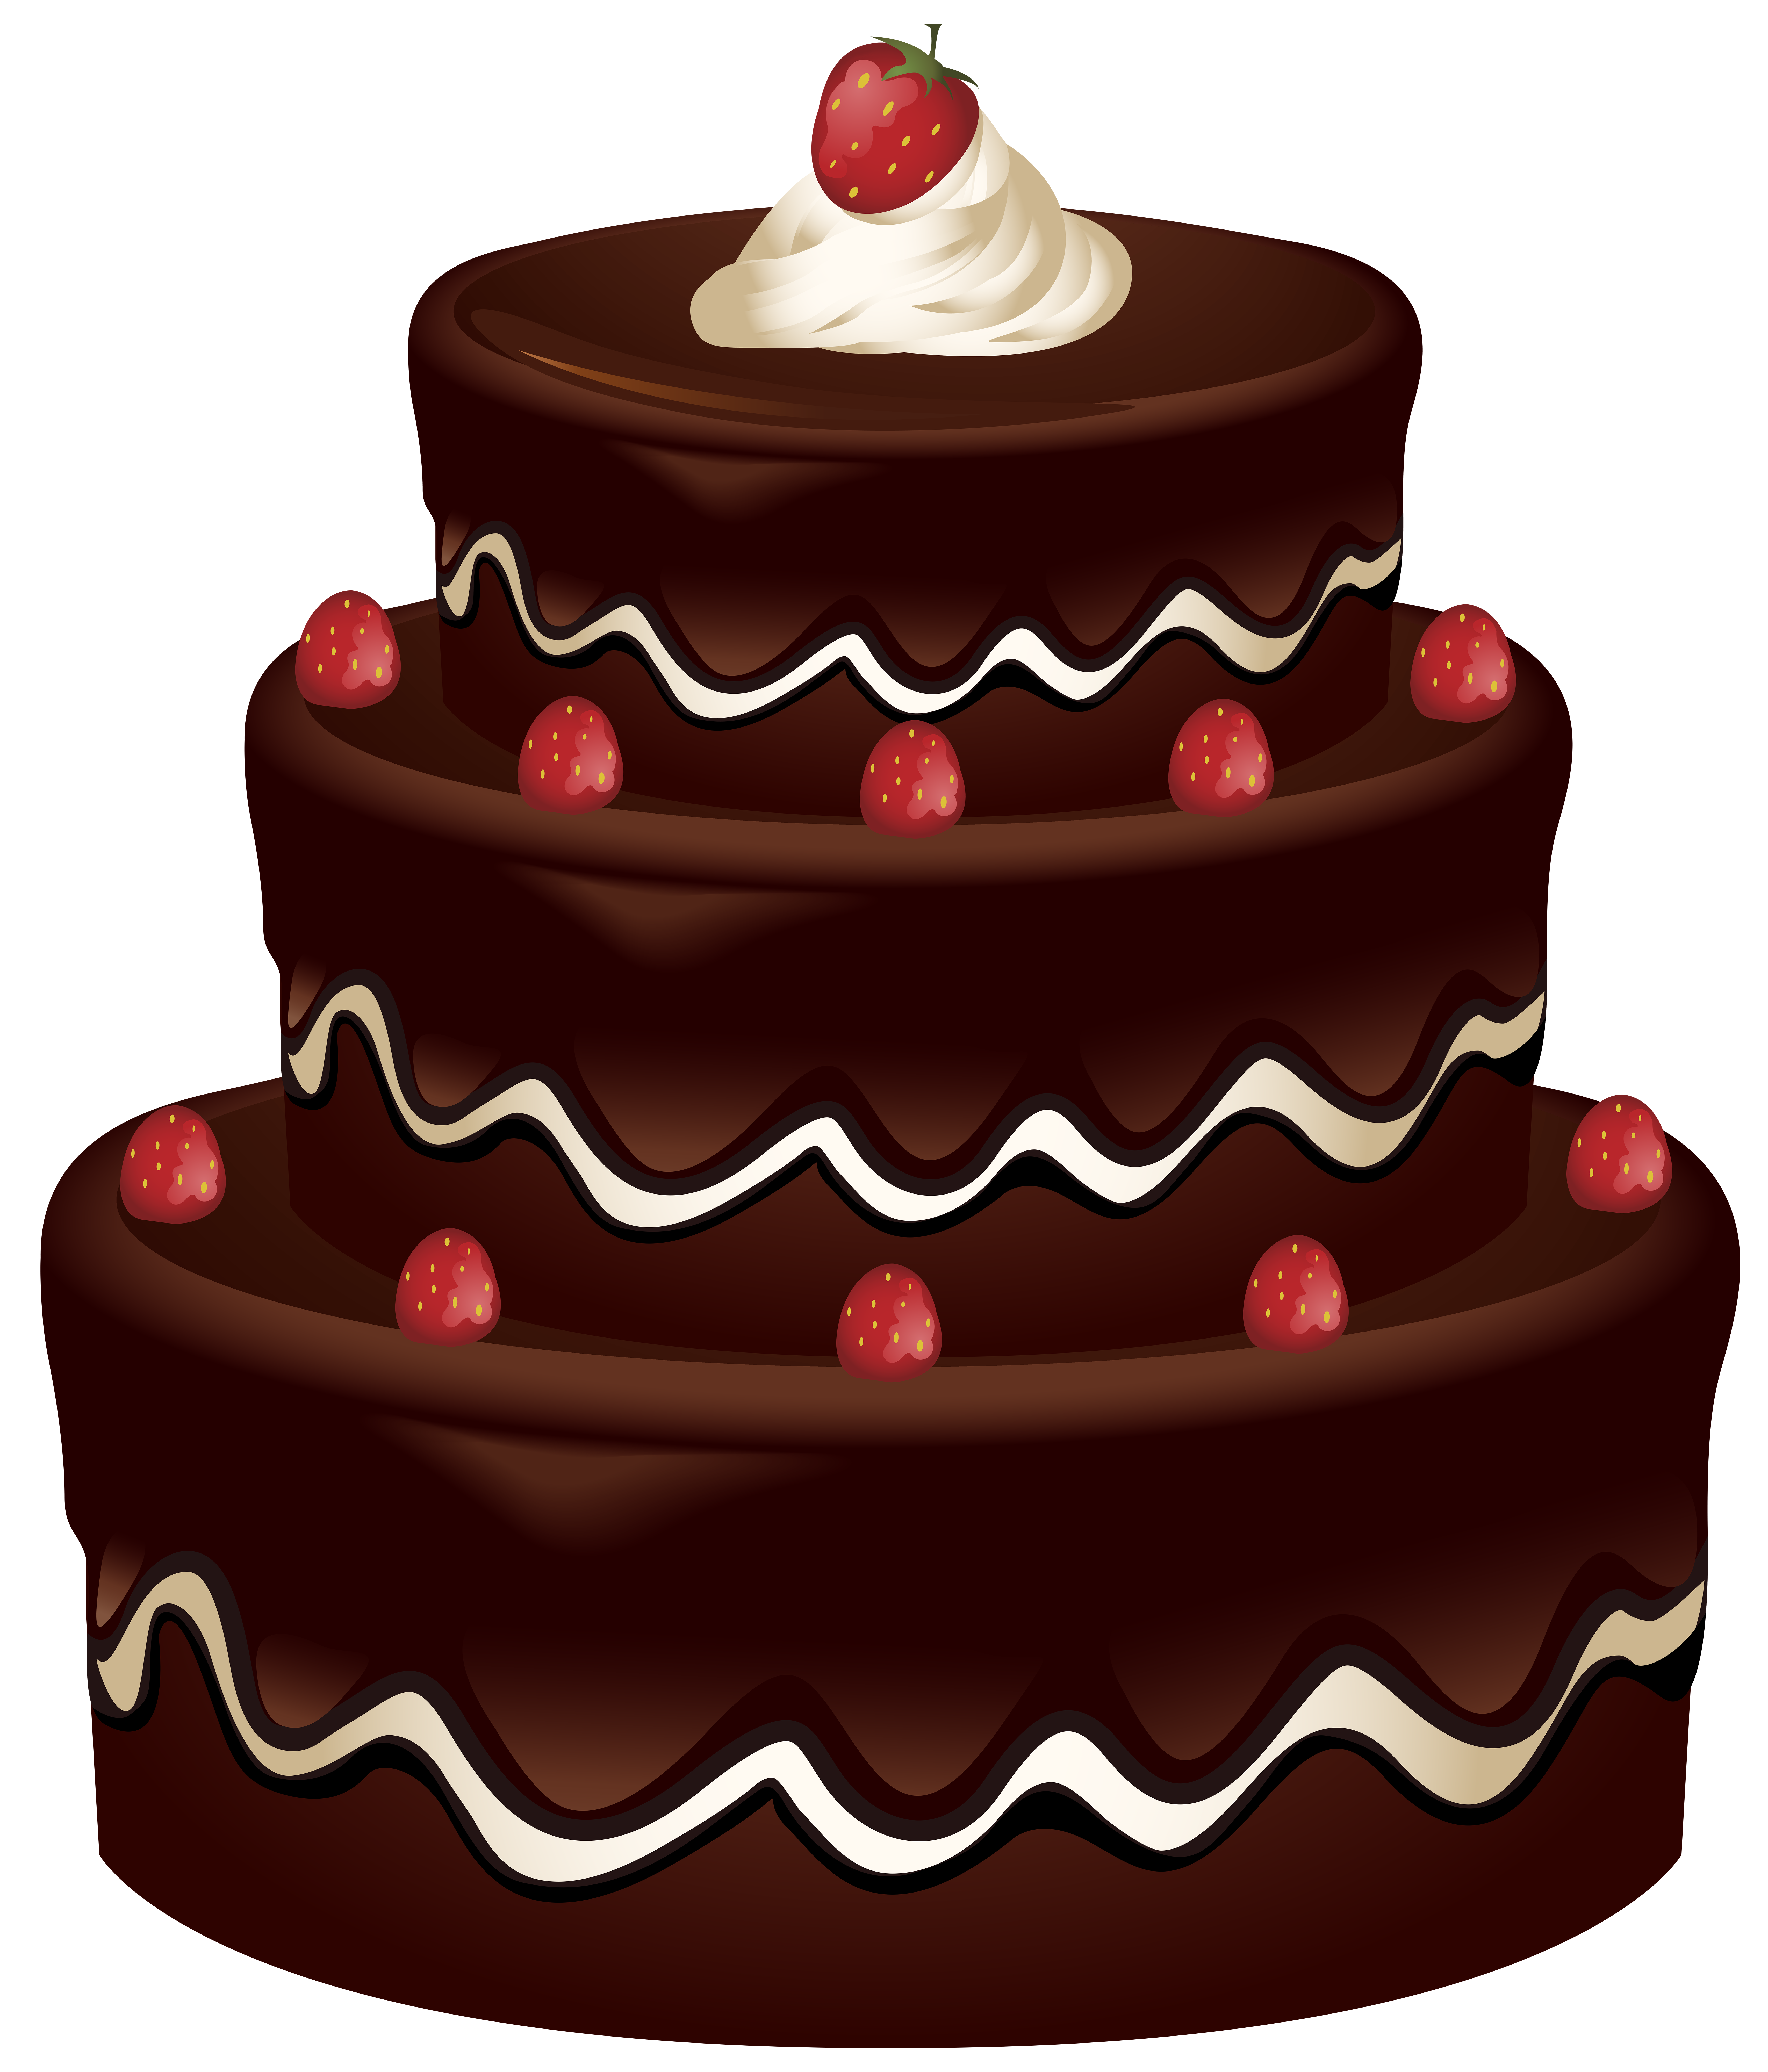 Cake Clip Art PNG Image.